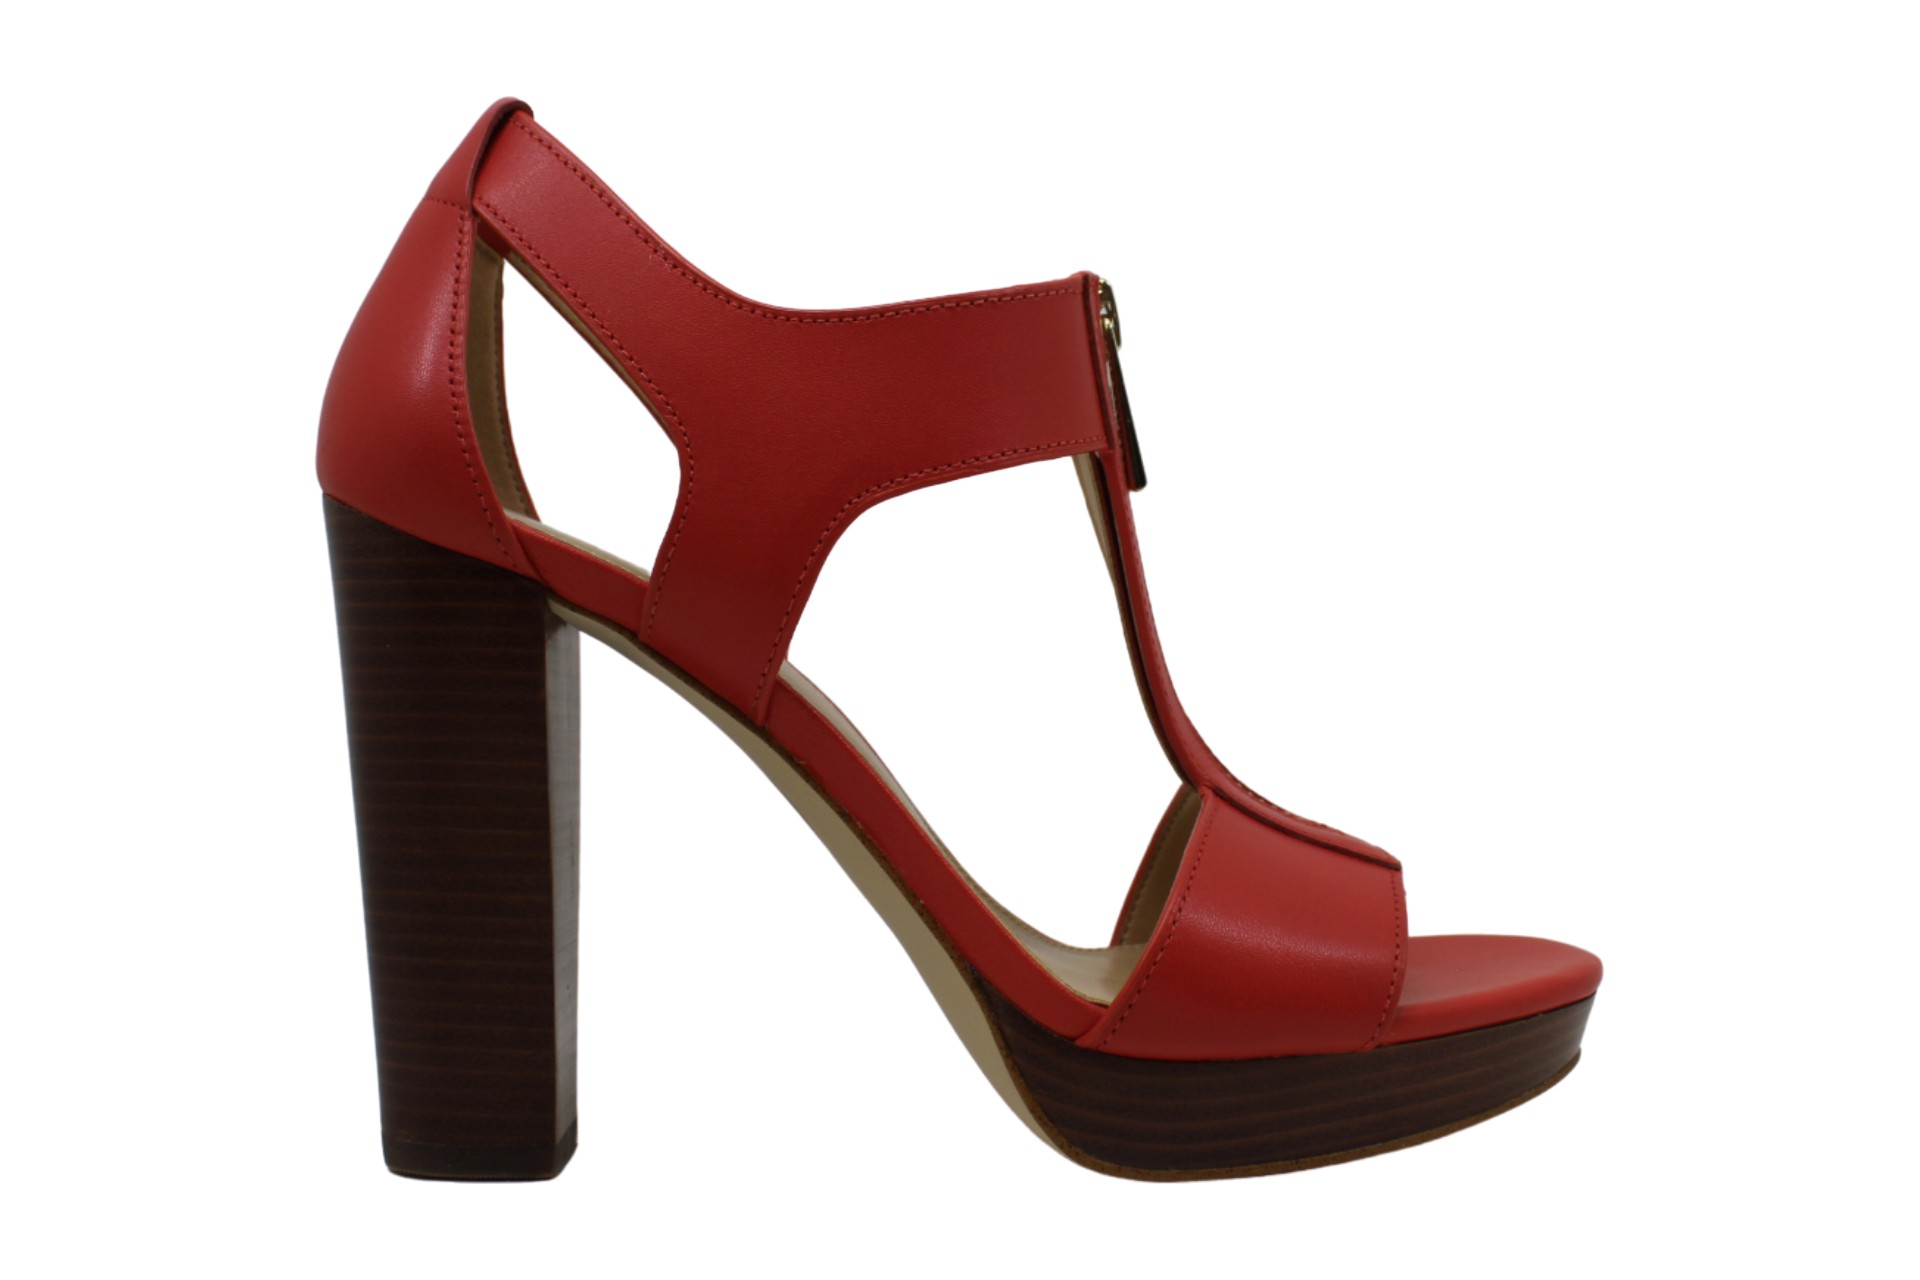 Michael Kors Womens Flat Sandals in Red Color, Size 7 UKE | eBay